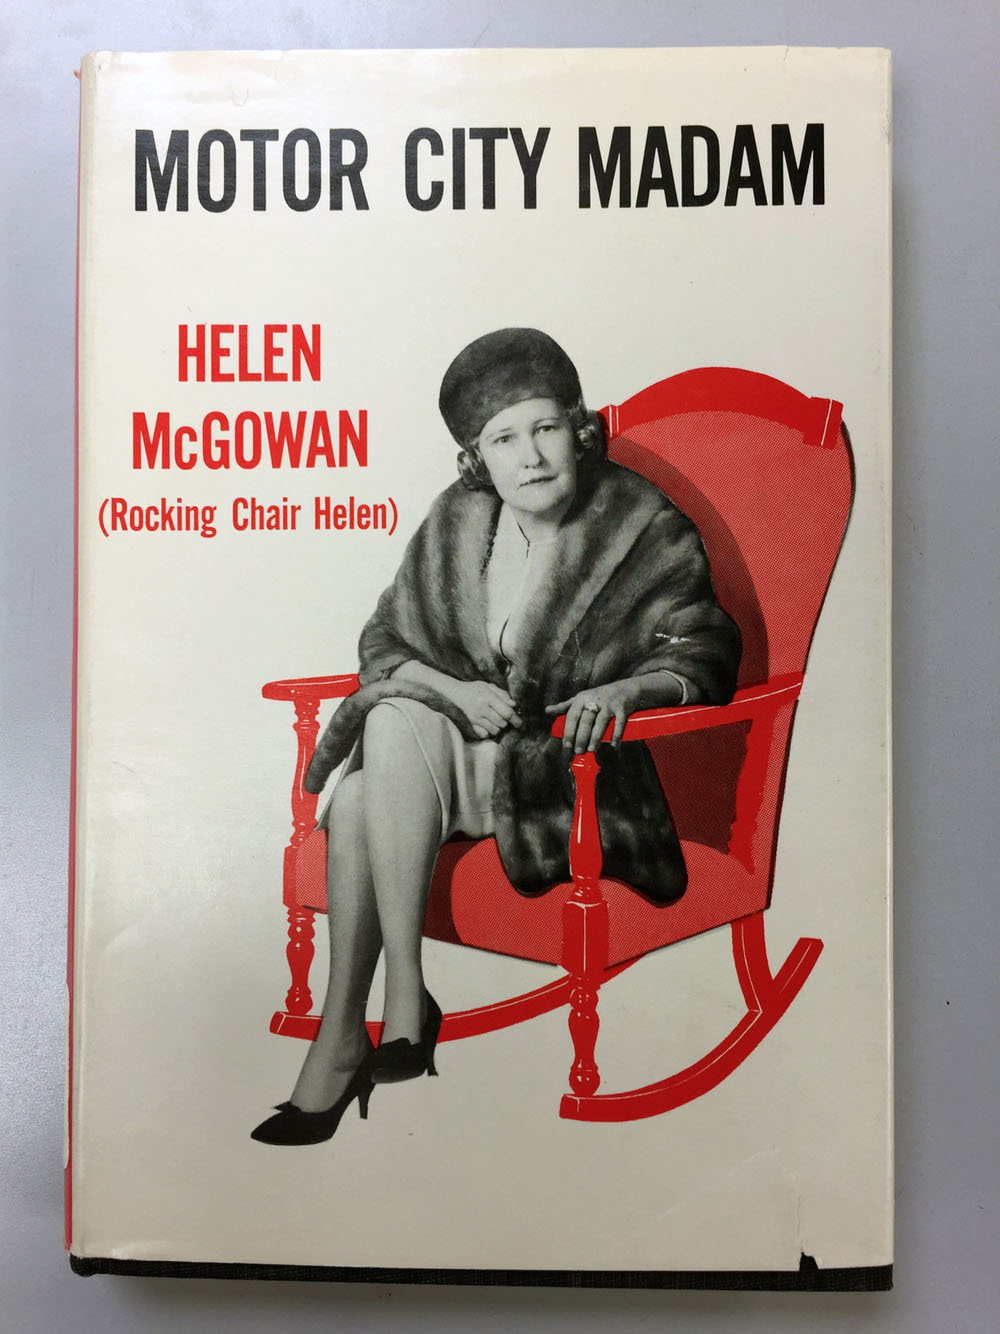 Motor City Madam book